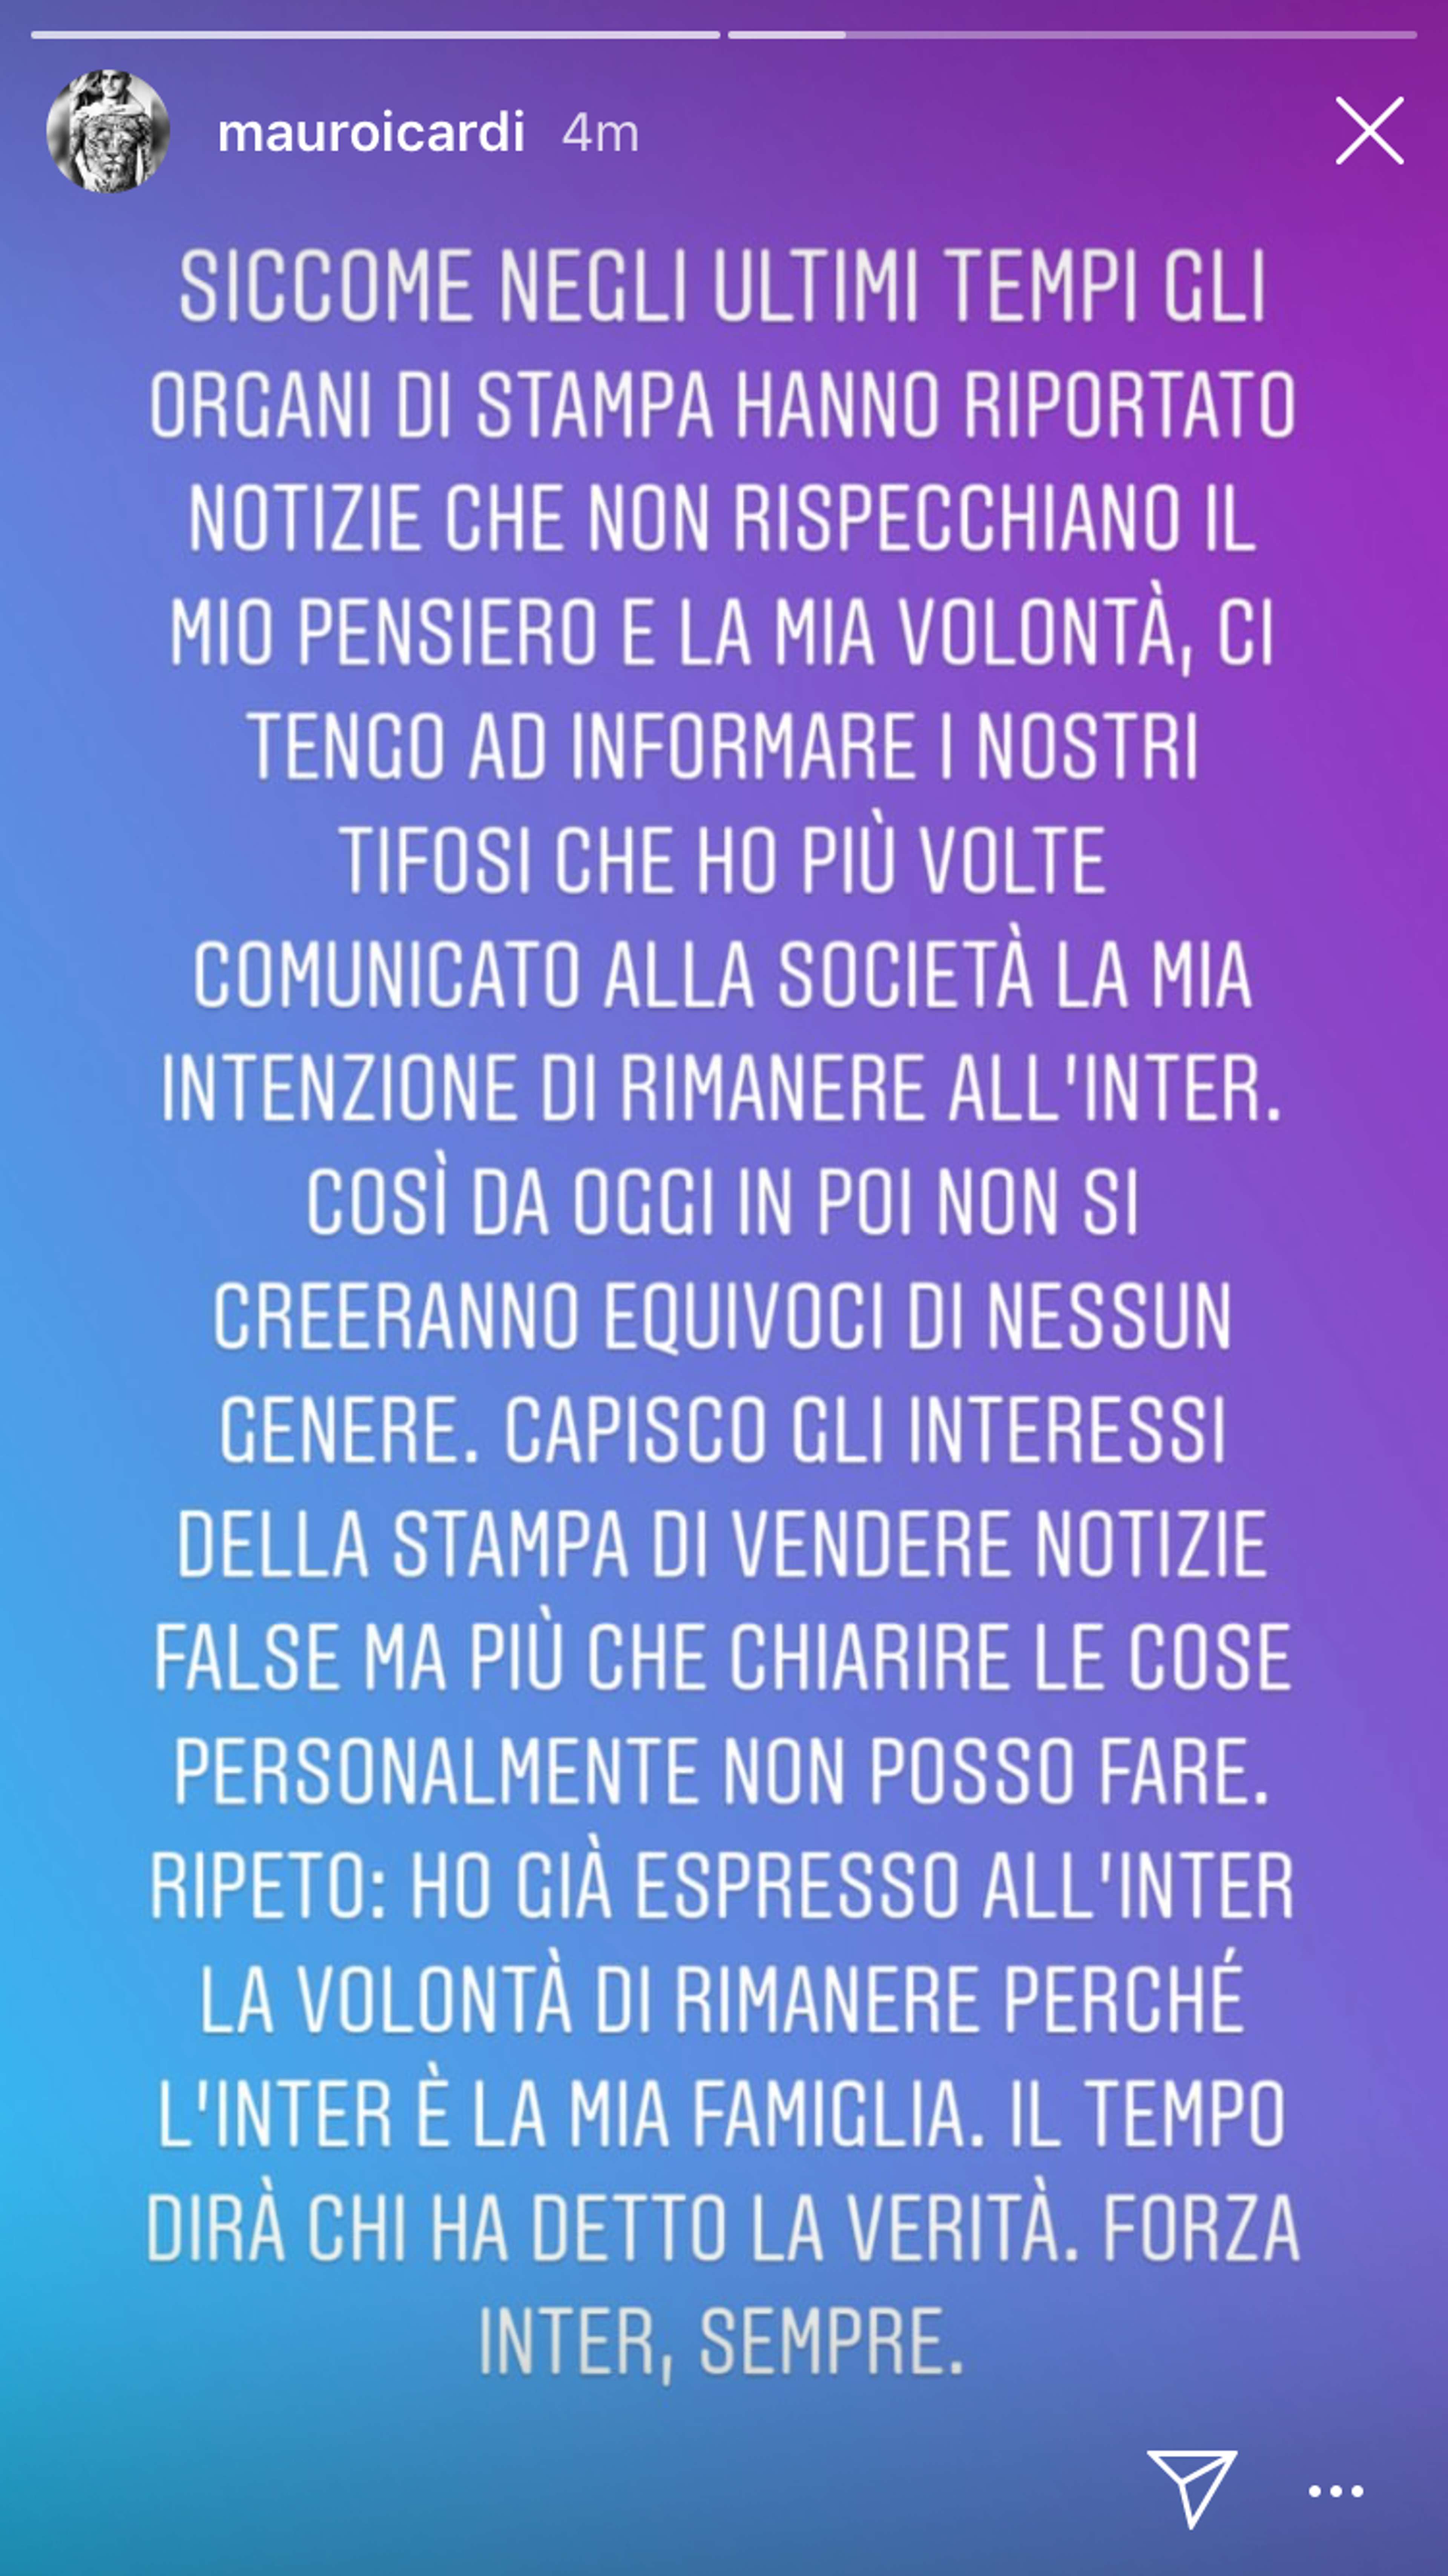 Icardi Instagram